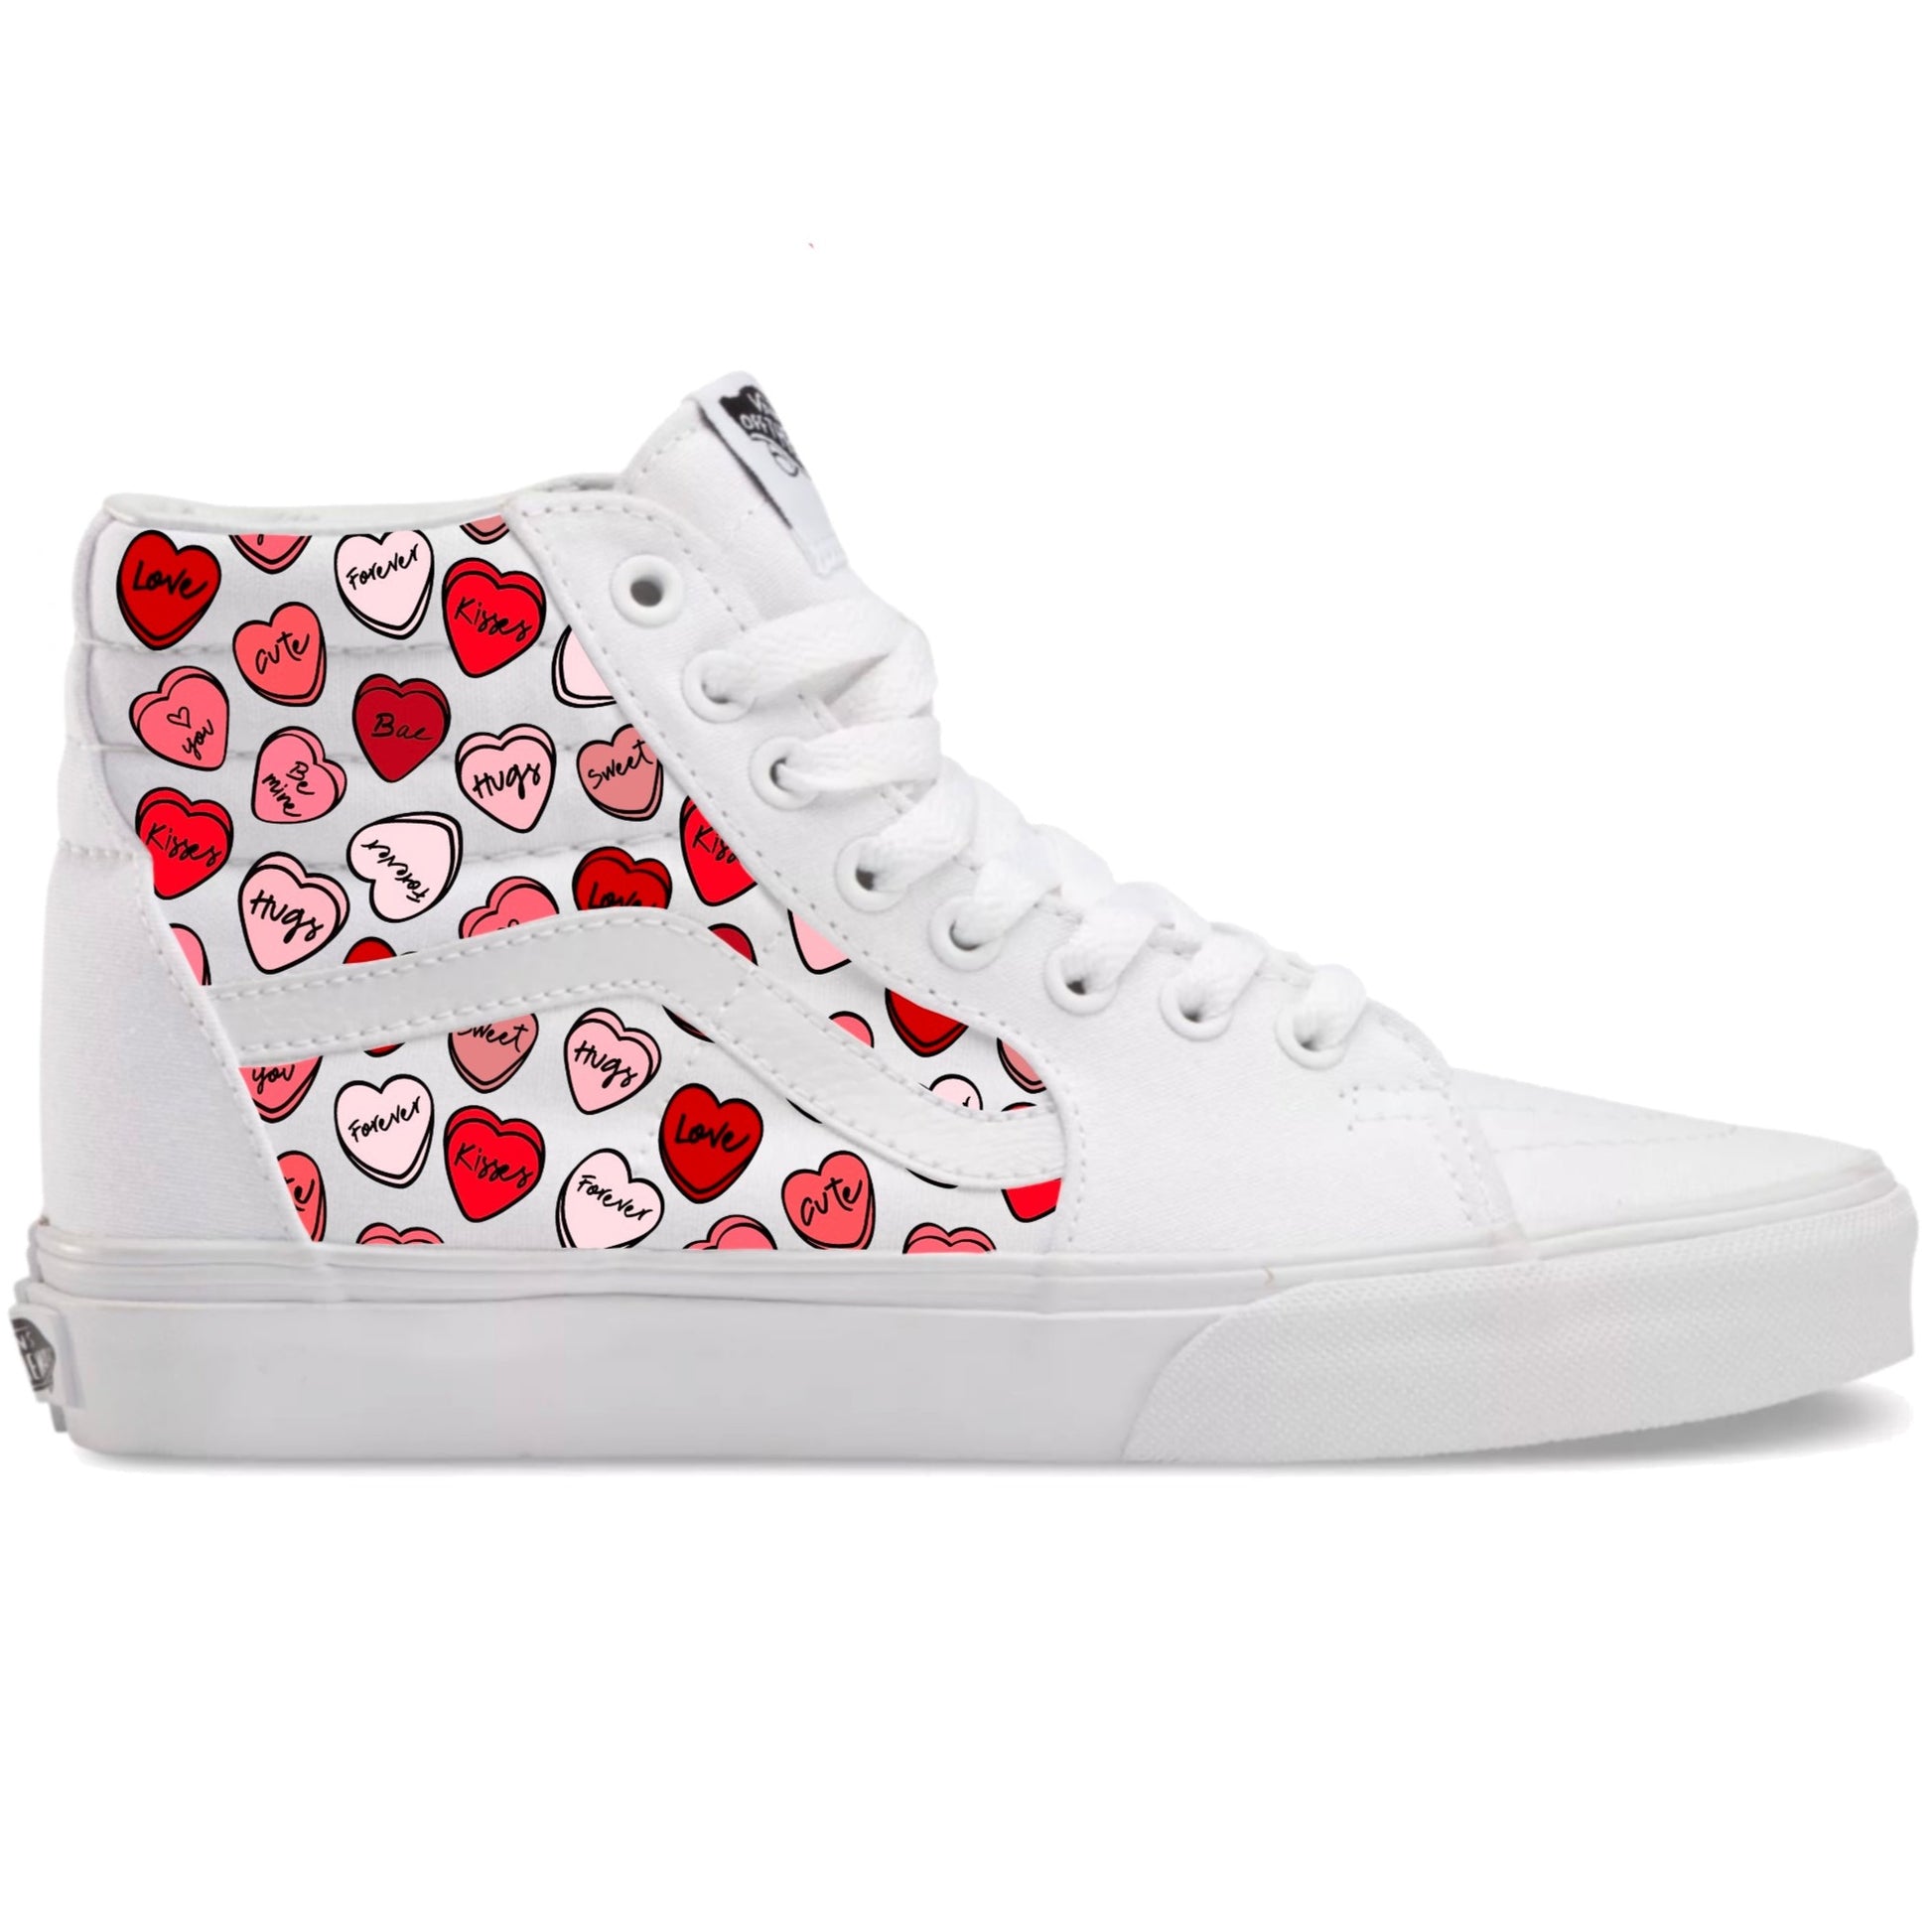 Candy Hearts - Valentine's Day Custom Sk8 Hi Vans - Custom Vans Shoes